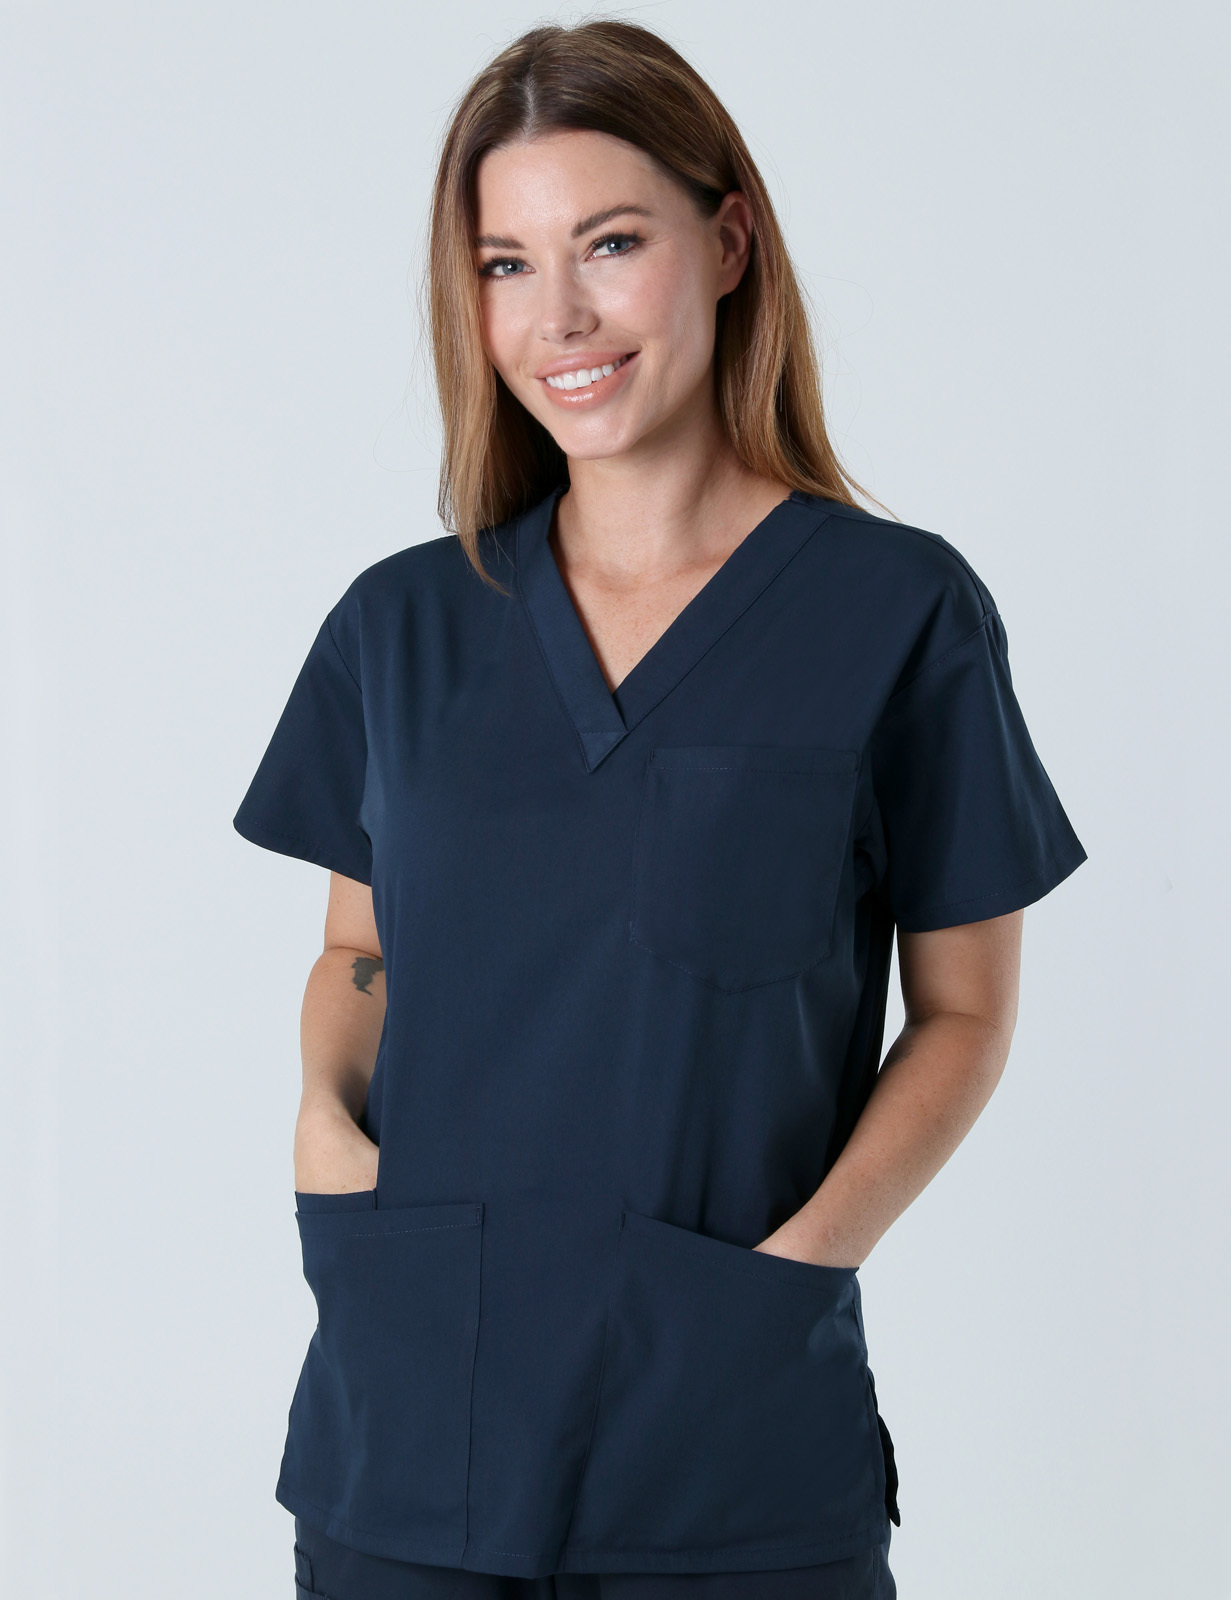 Female Pure Cotton Hospital uniform Black for women nurse cargo